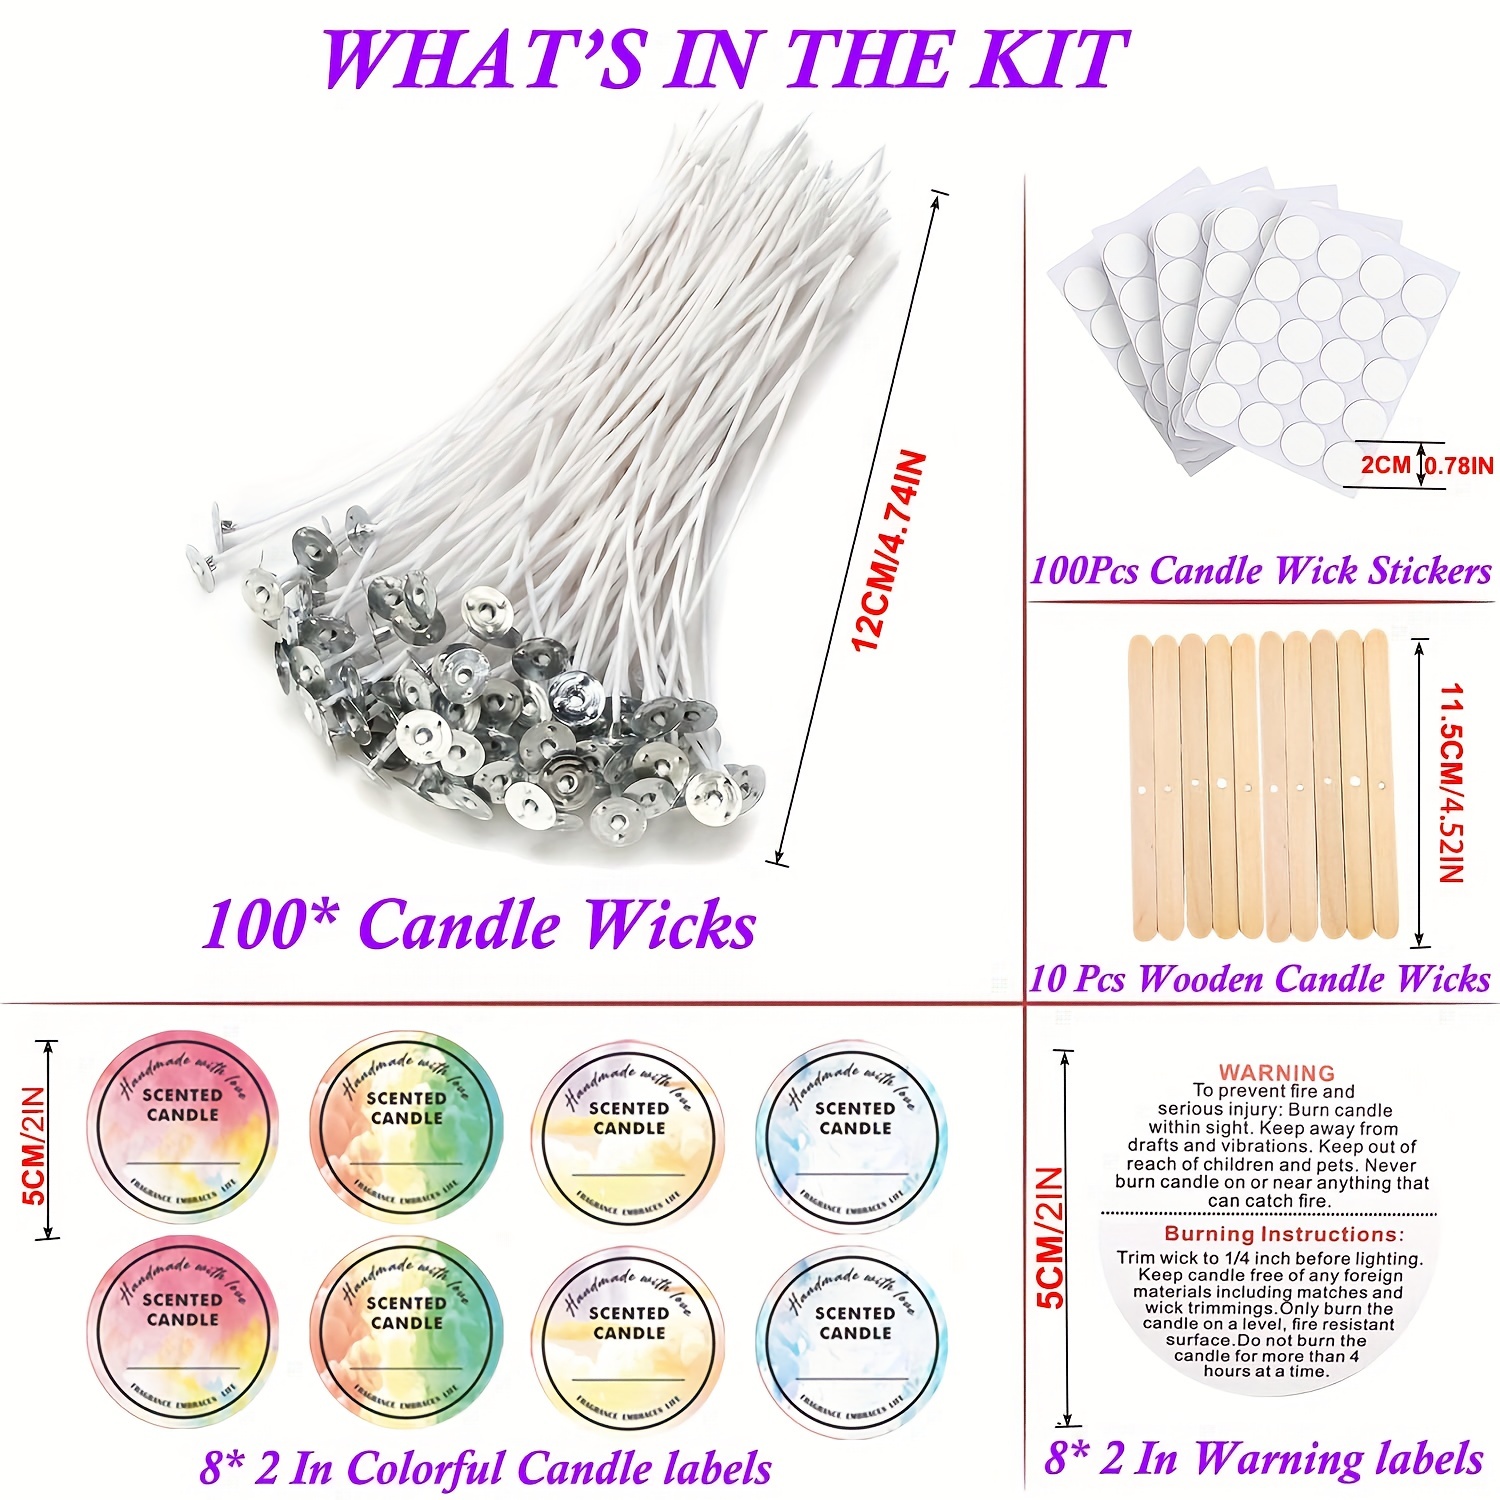  Candle Wicks Kit,100 Candle Wicks, Wick Stickers, Wick